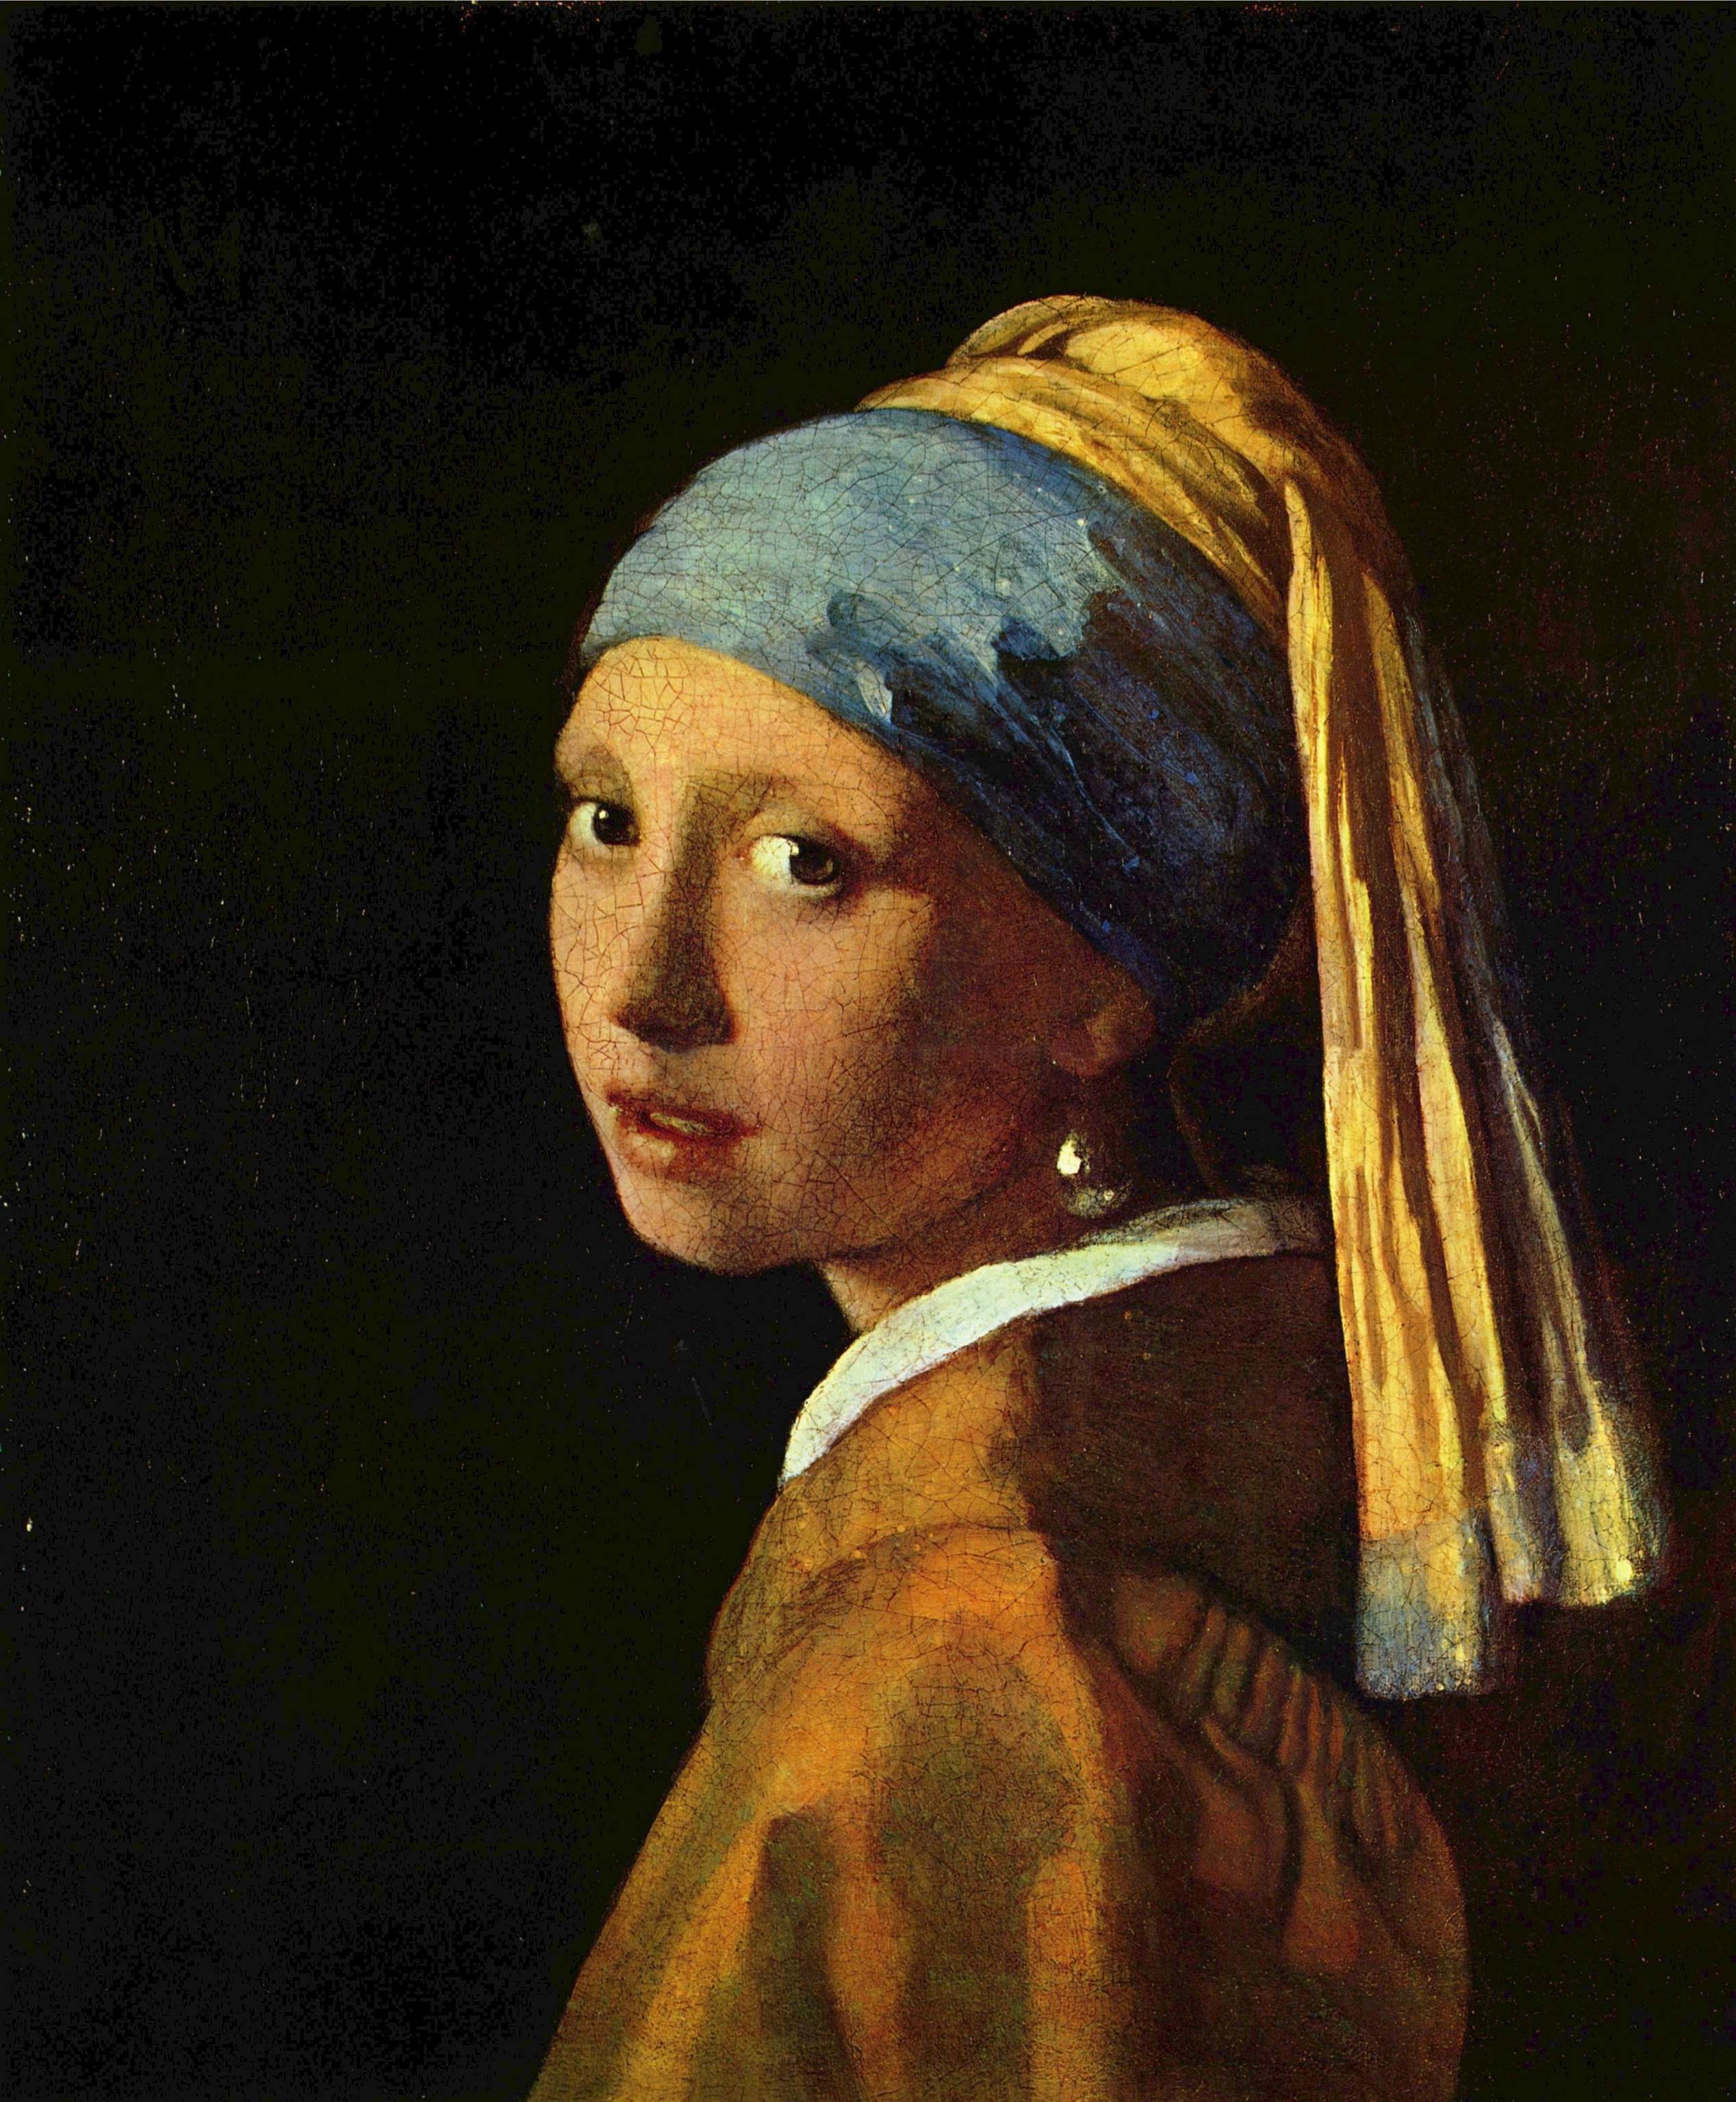 "La joven de la perla" de Jan Vermeer